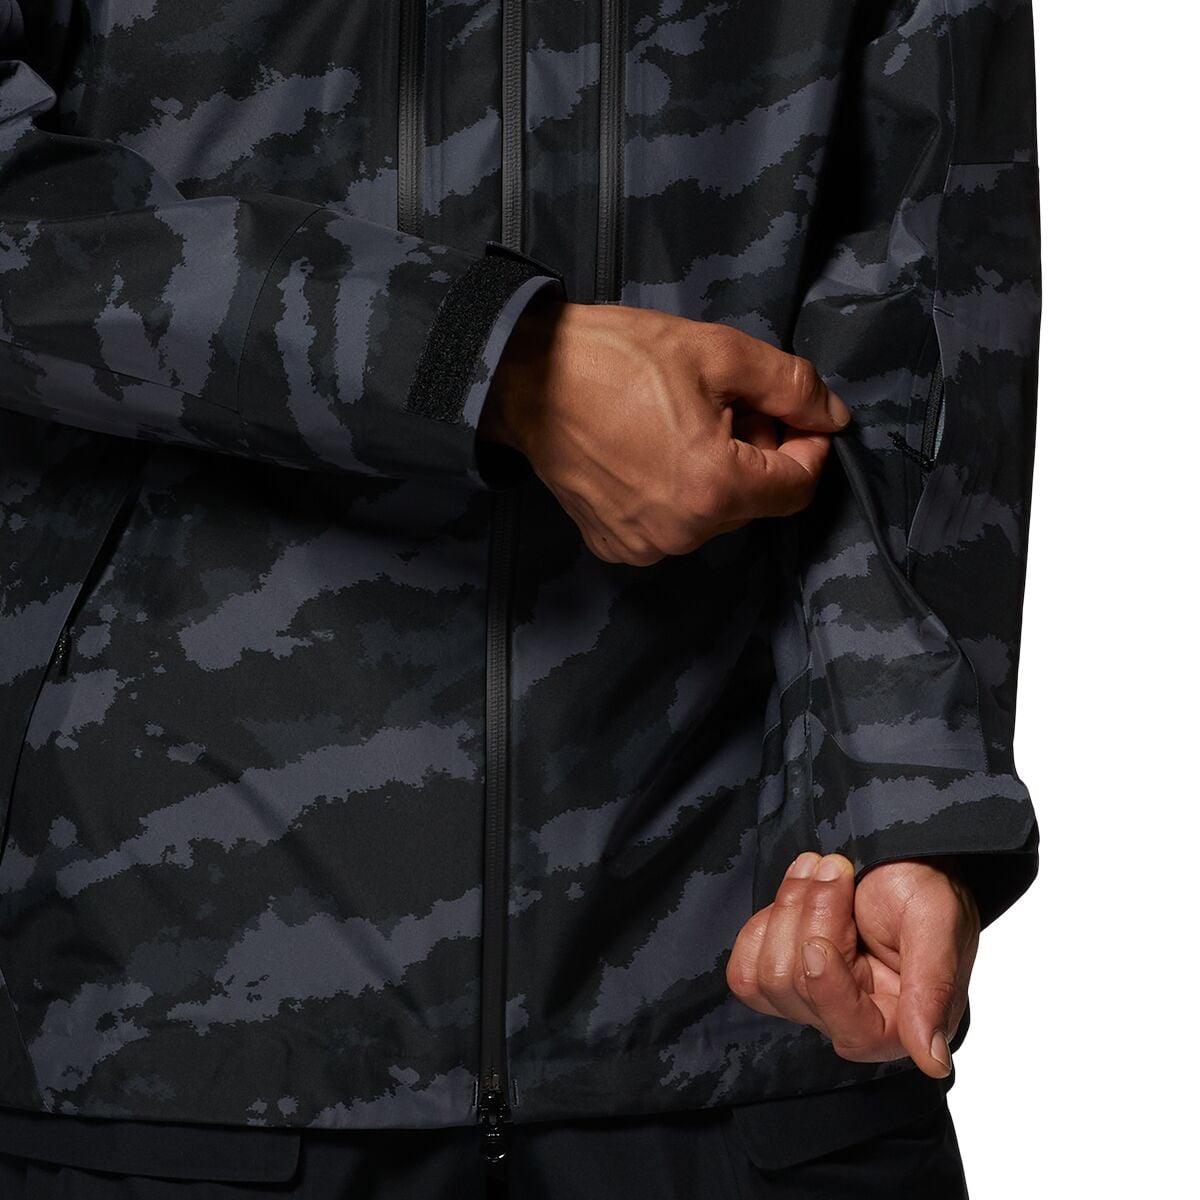 Mountain Hardwear Boundary Ridge GORE-TEX 3L Jacket - Men's - Clothing